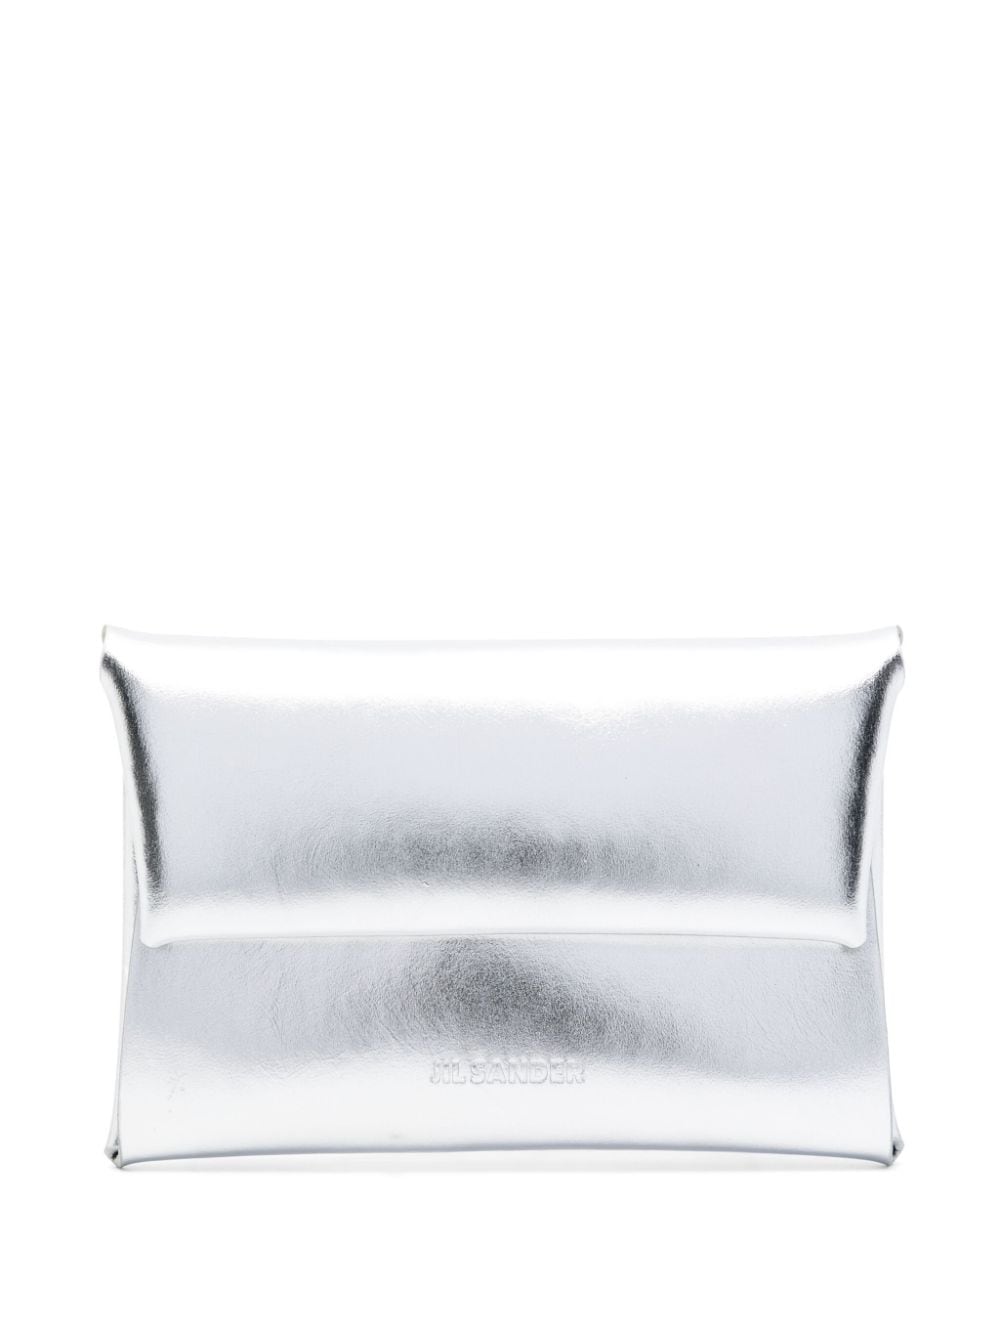 Jil Sander logo-debossed leather coin purse - Silver von Jil Sander